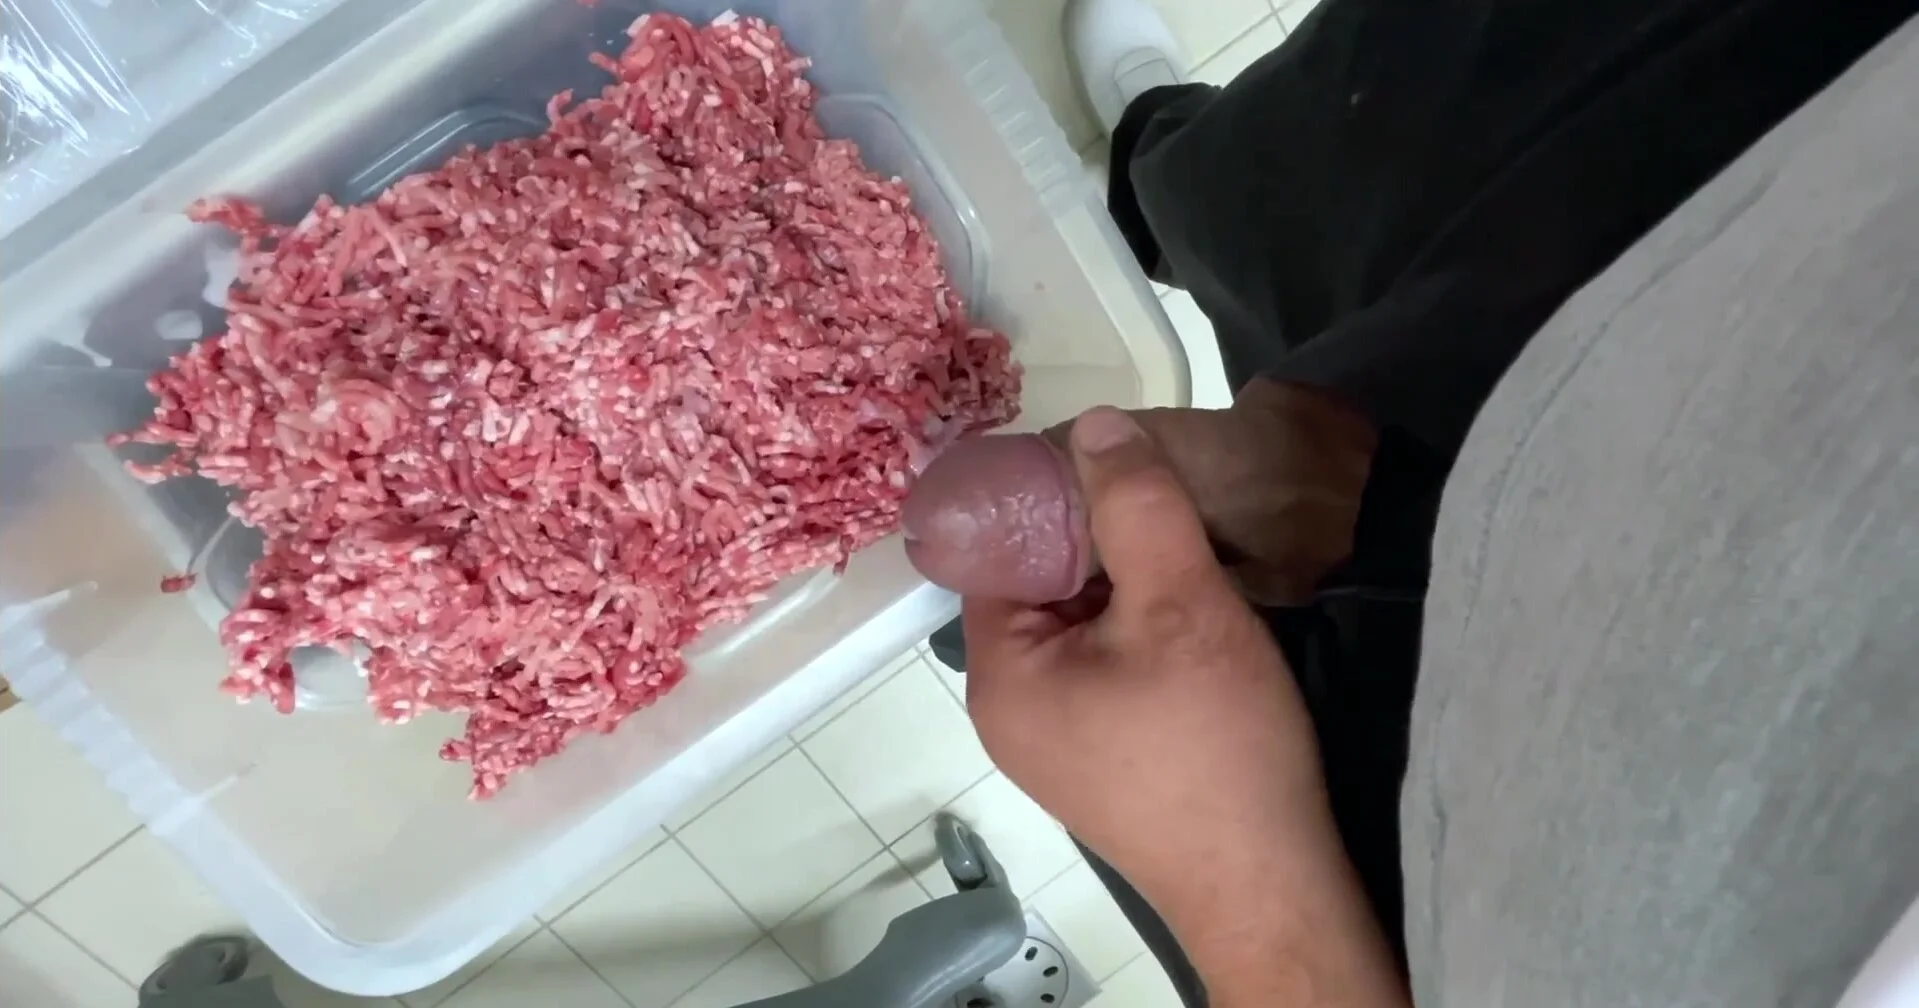 Food fuck: Butcher Cum in Meat - ThisVid.com